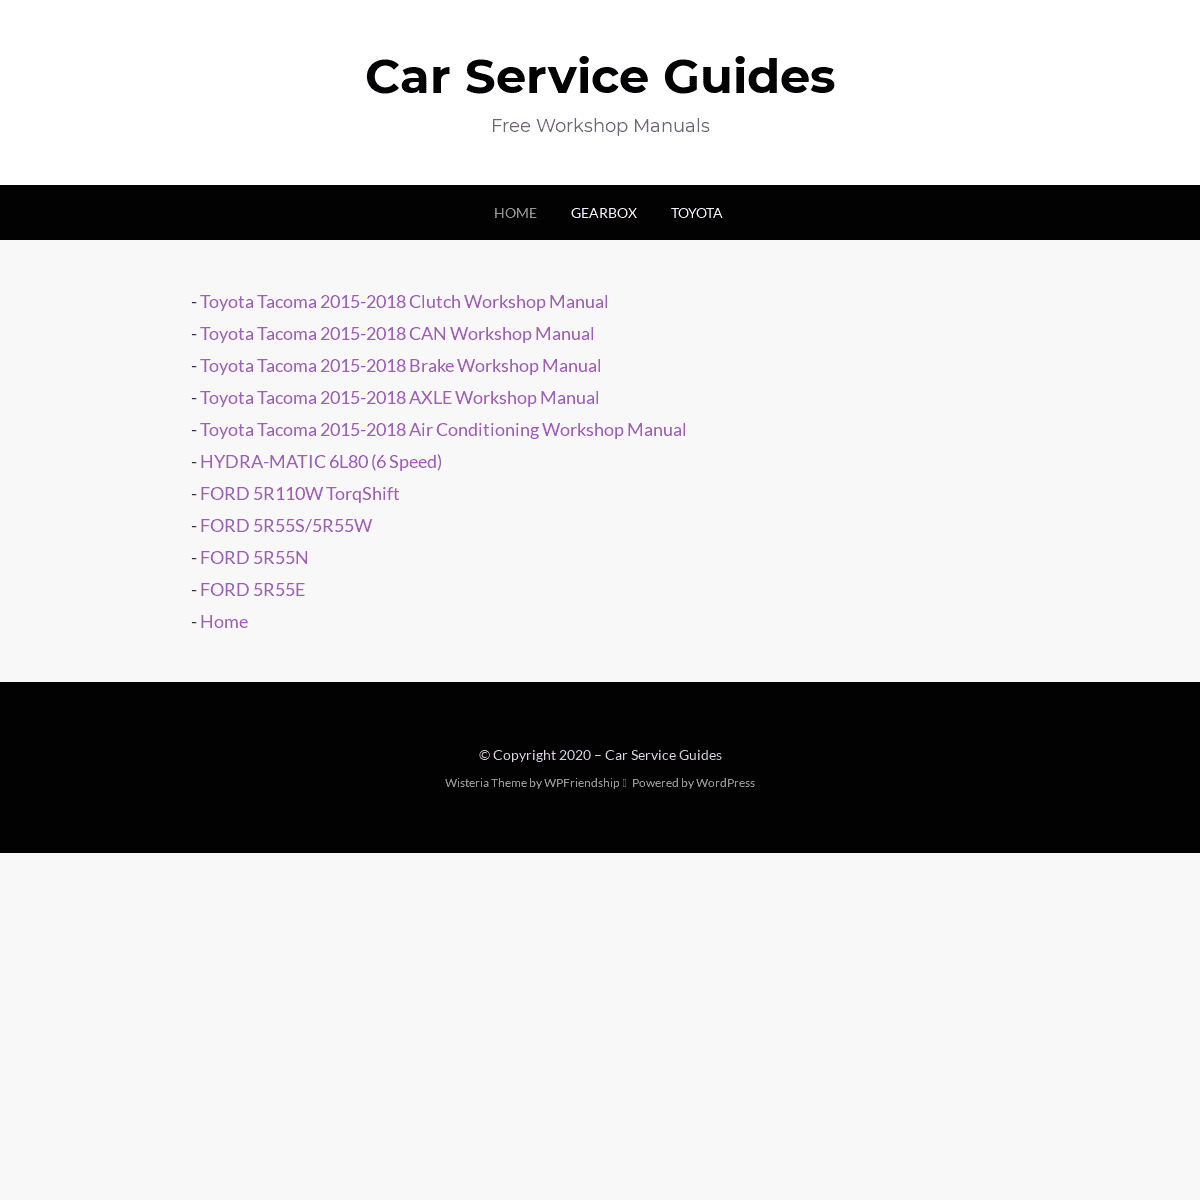 A complete backup of automotive-manuals.com